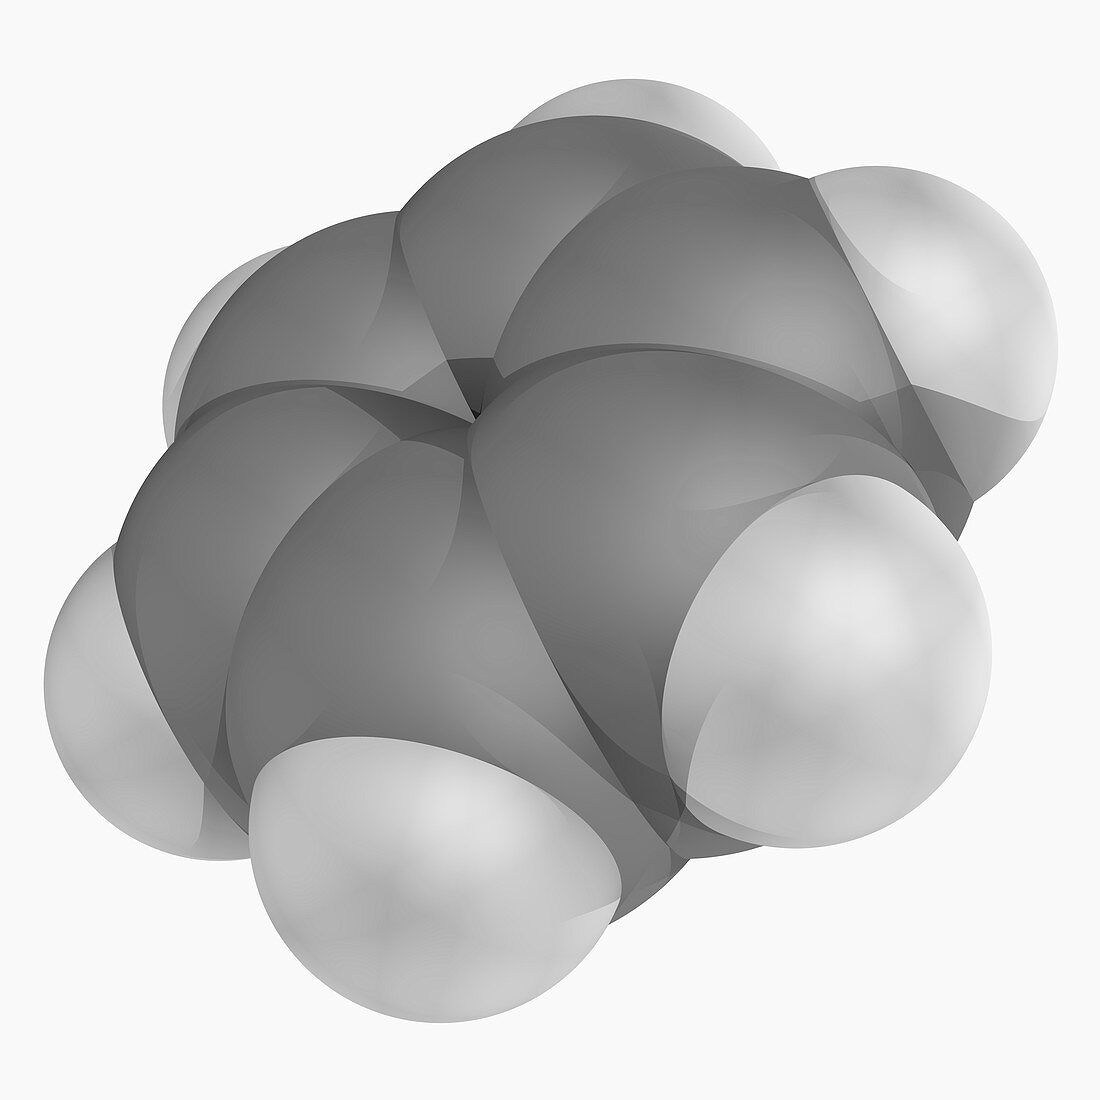 Benzene molecule